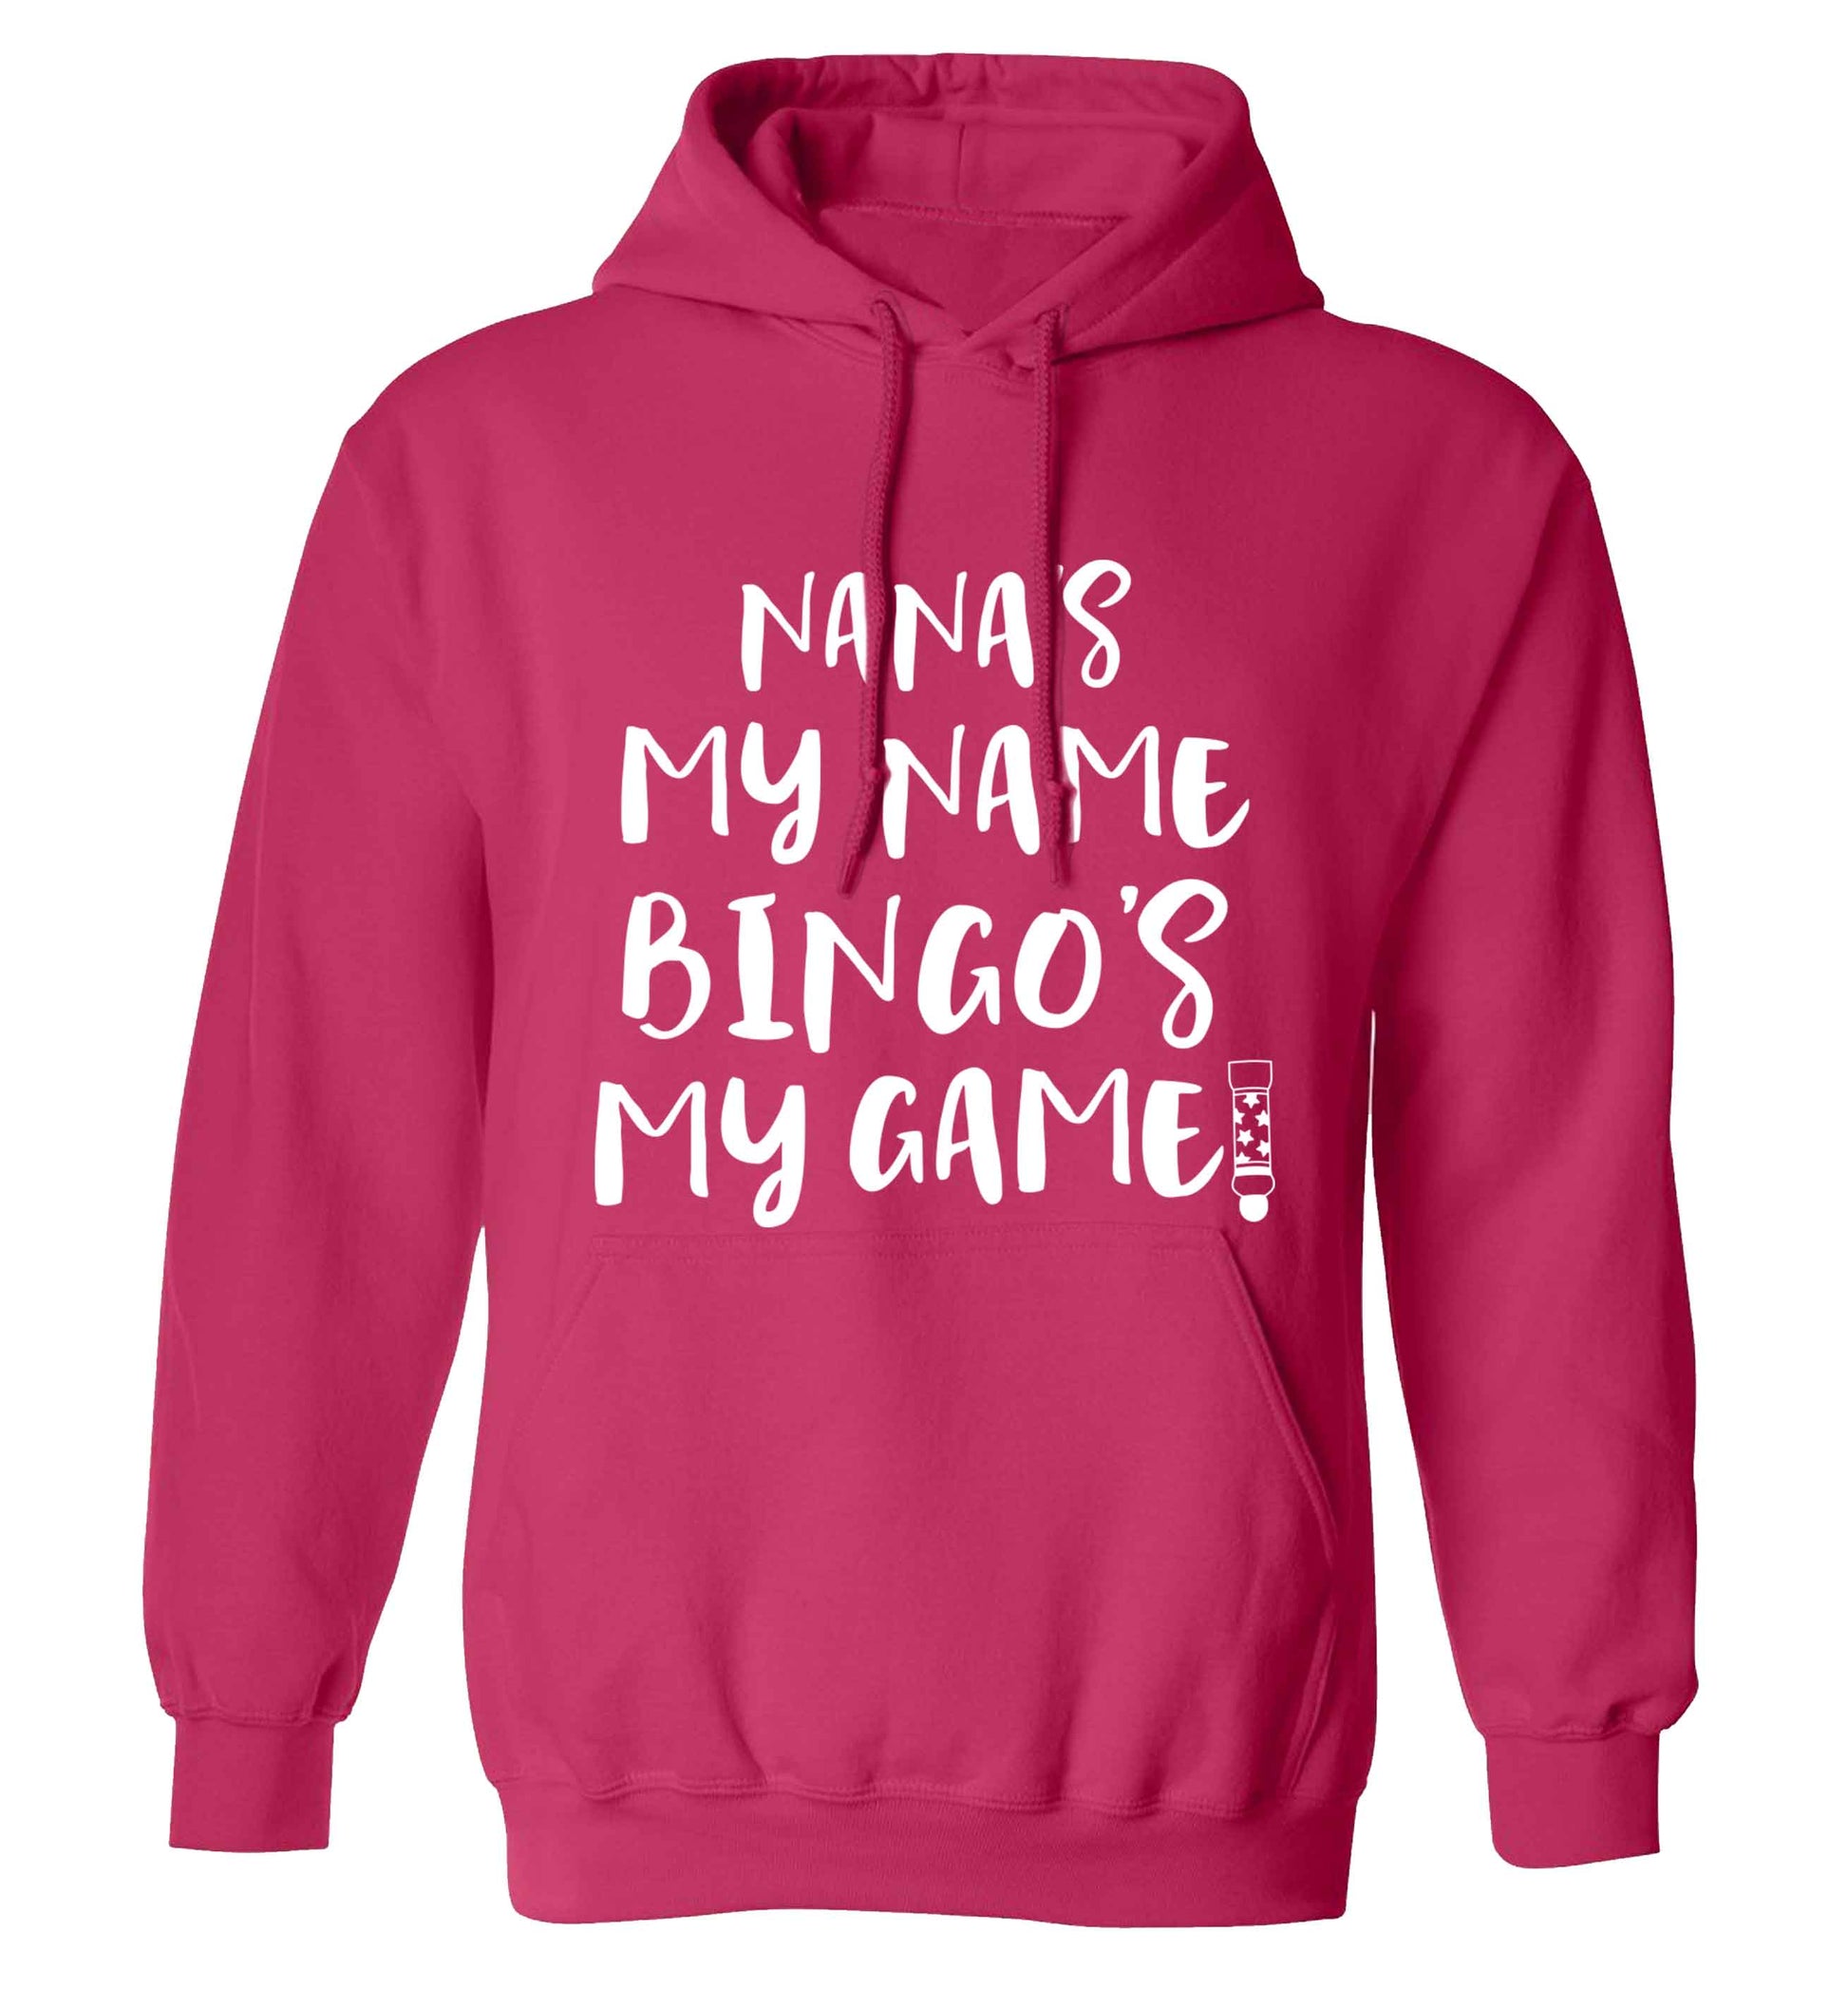 Nana's my name bingo's my game! adults unisex pink hoodie 2XL